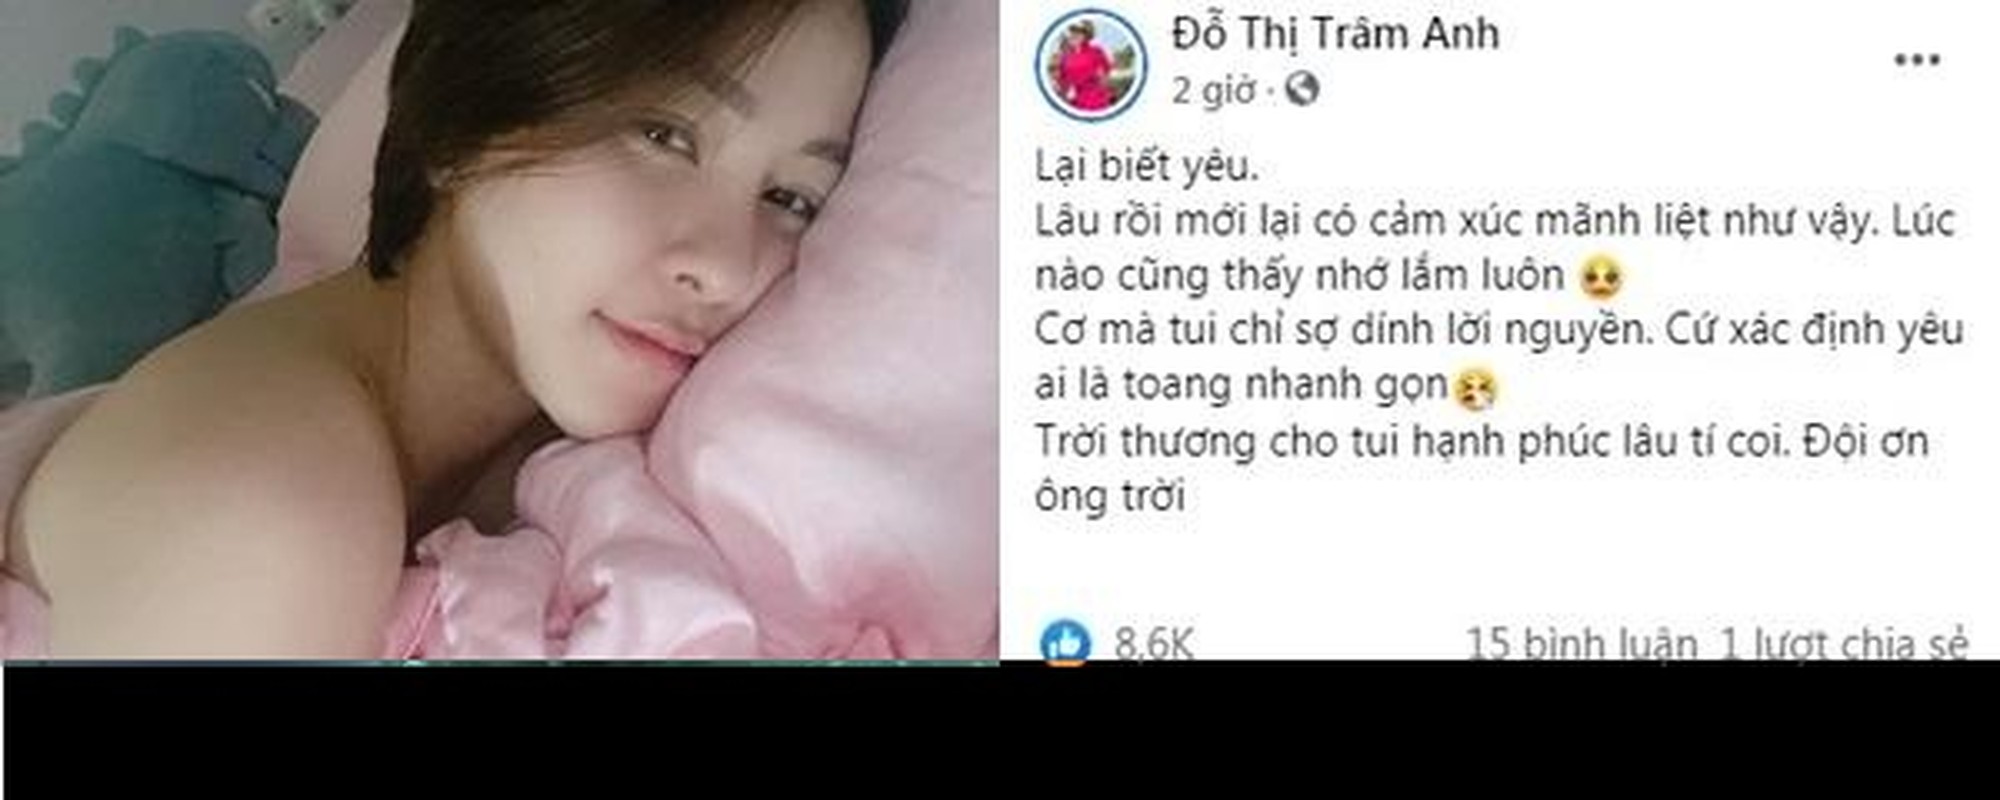 Hau nghi van “toang” voi ban trai, Tram Anh co dong thai la-Hinh-5